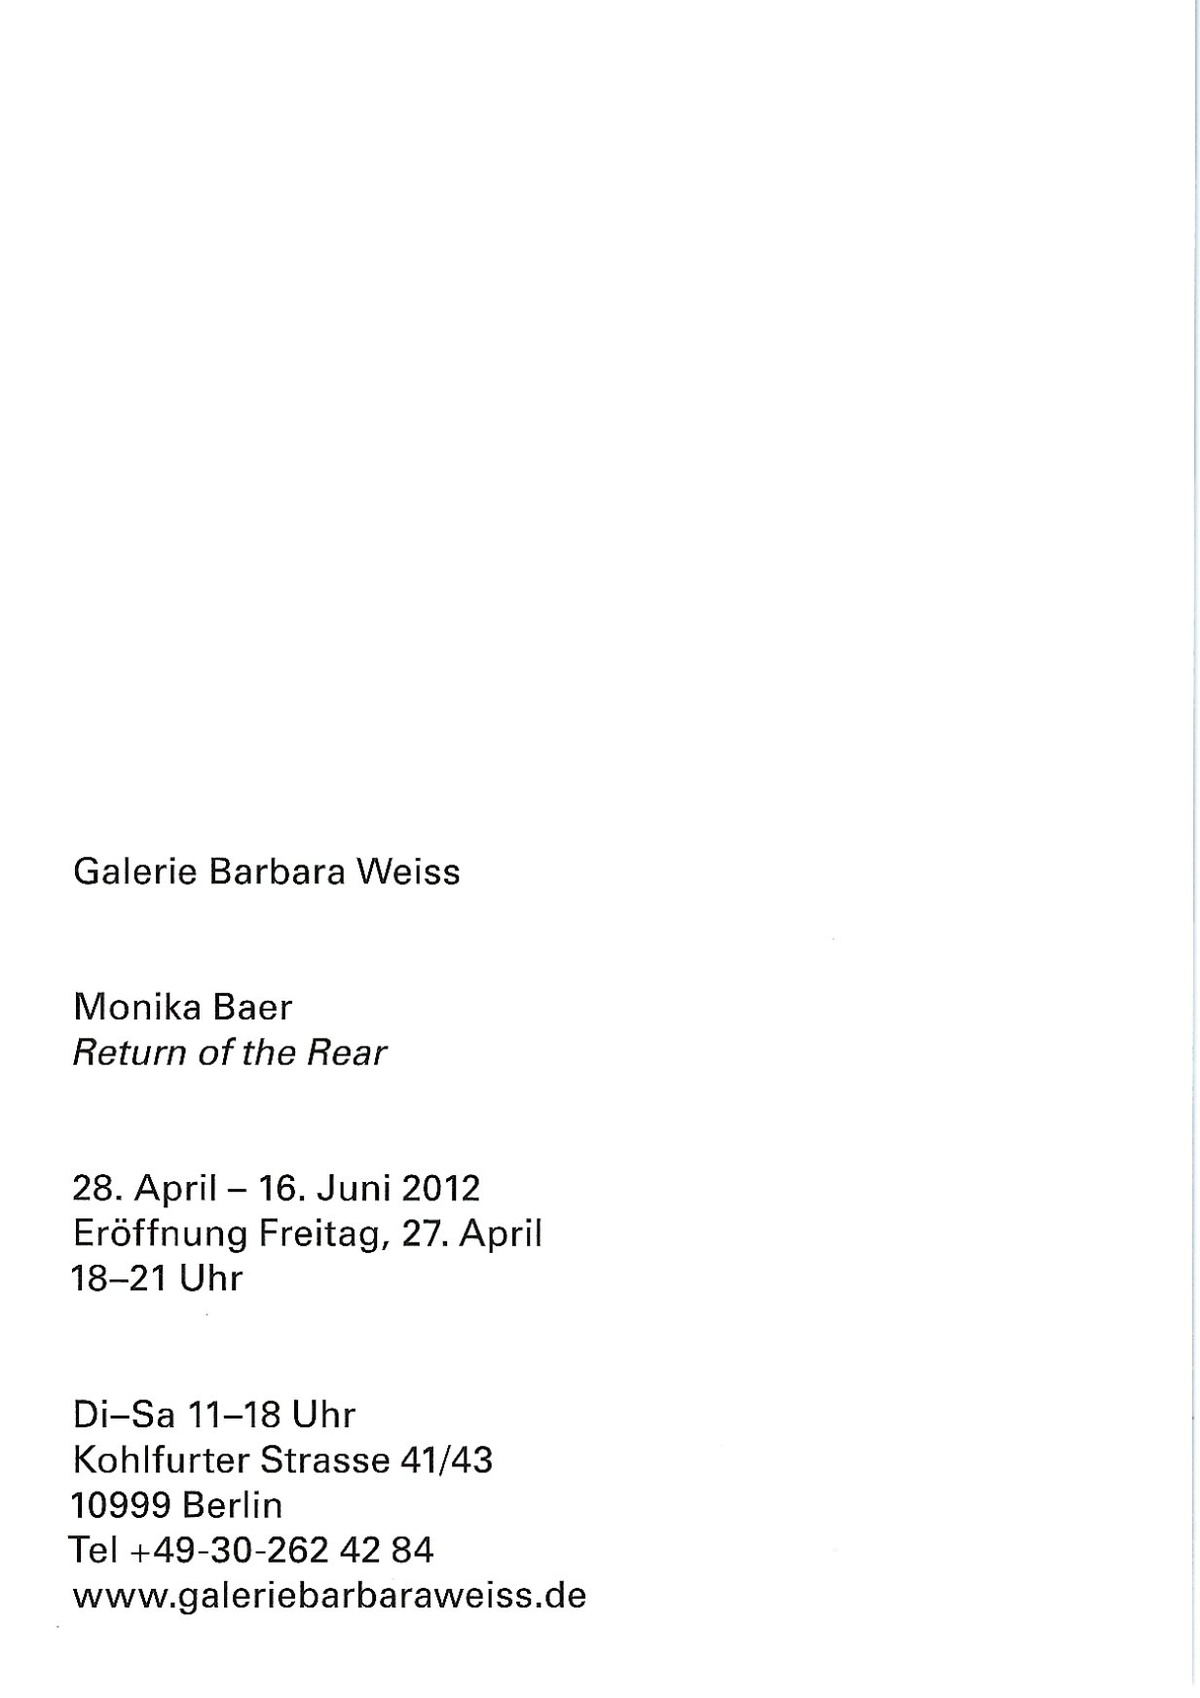 Monika Baer: Return of the Rear. April 28 – June 16, 2012